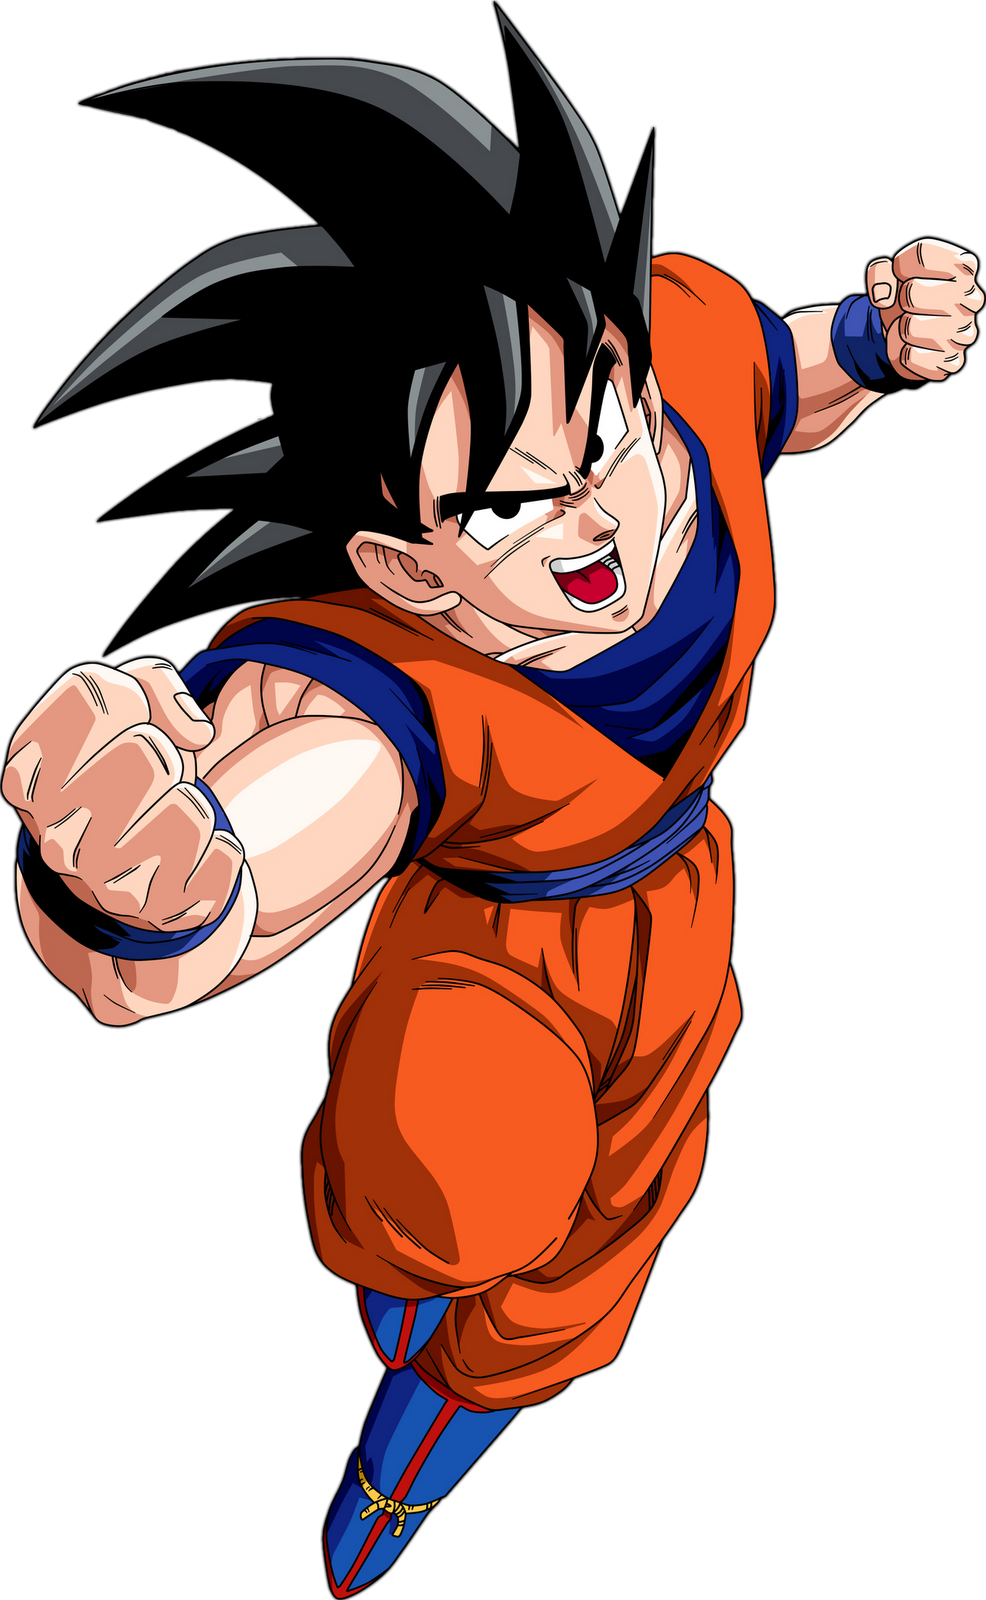 Son Goku Character Profile Wikia Fandom Powered By Wikia